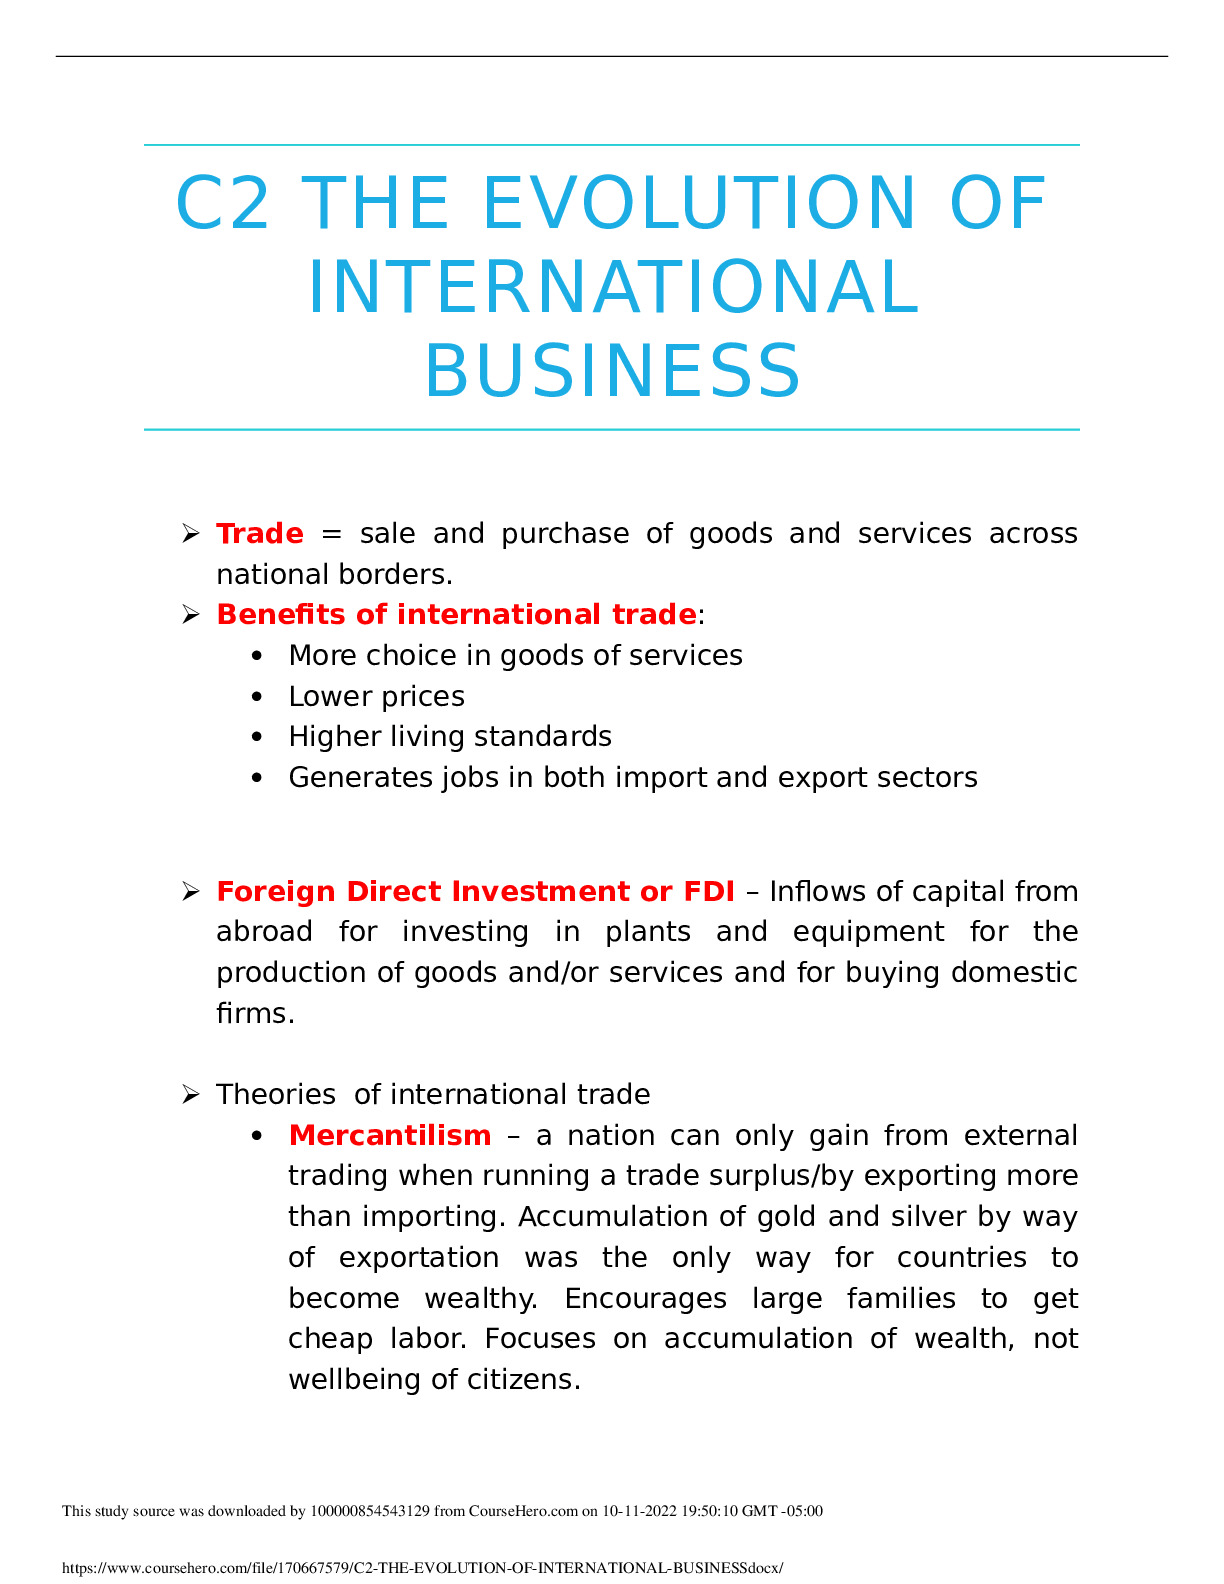 C2_THE_EVOLUTION_OF_INTERNATIONAL_BUSINESS.docx